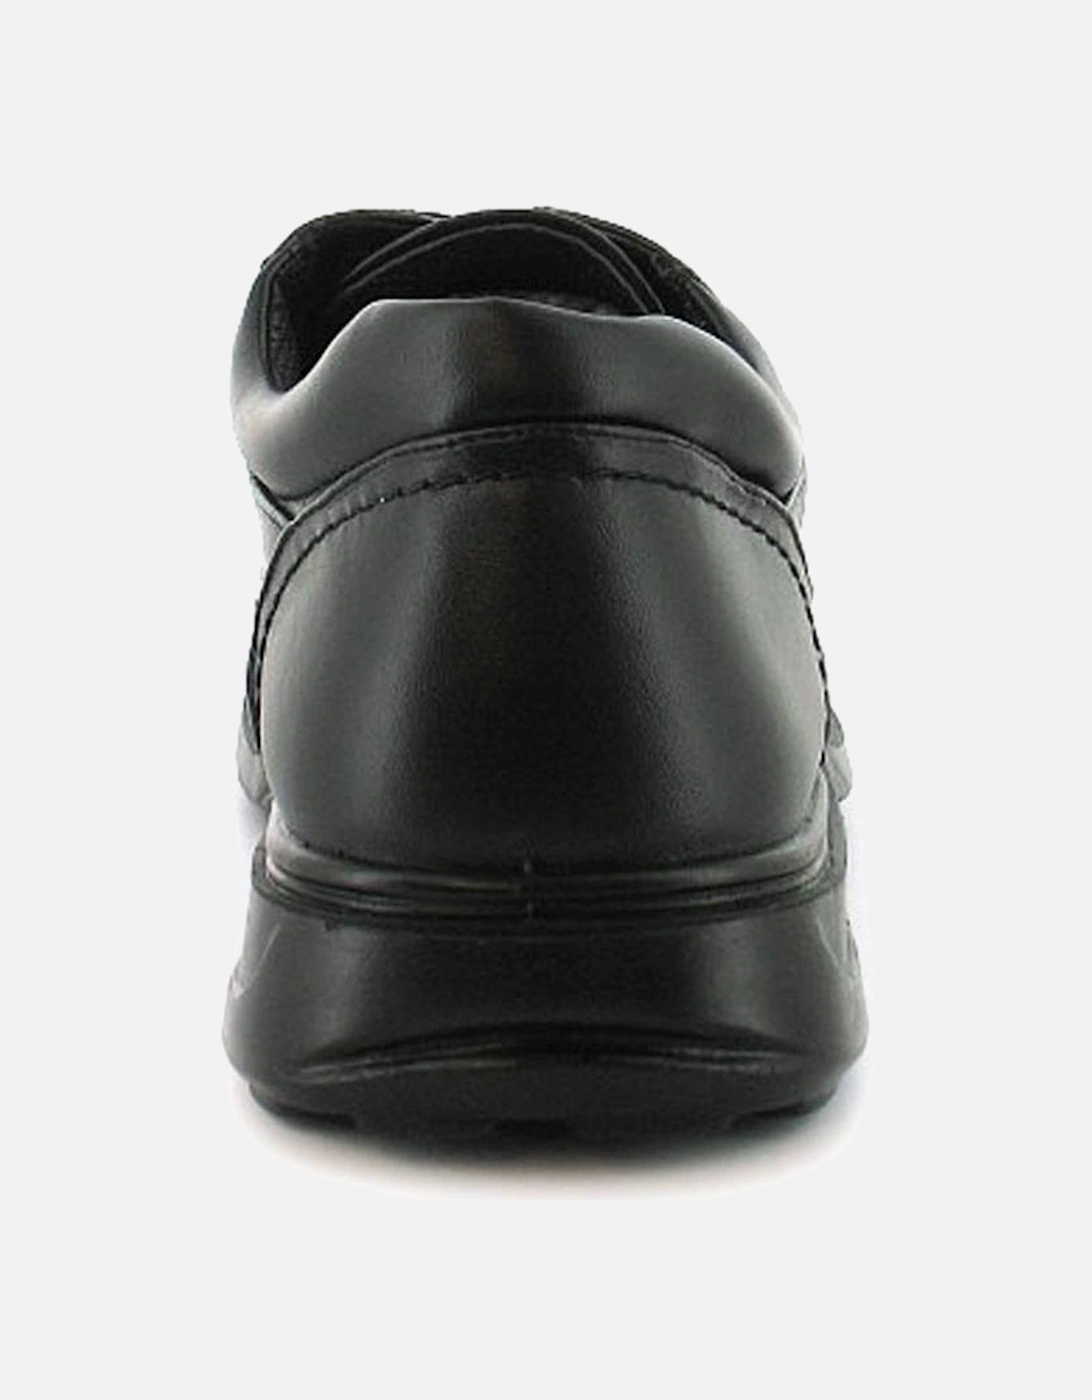 Mens Smart Shoes Freddy Lace Up black UK Size